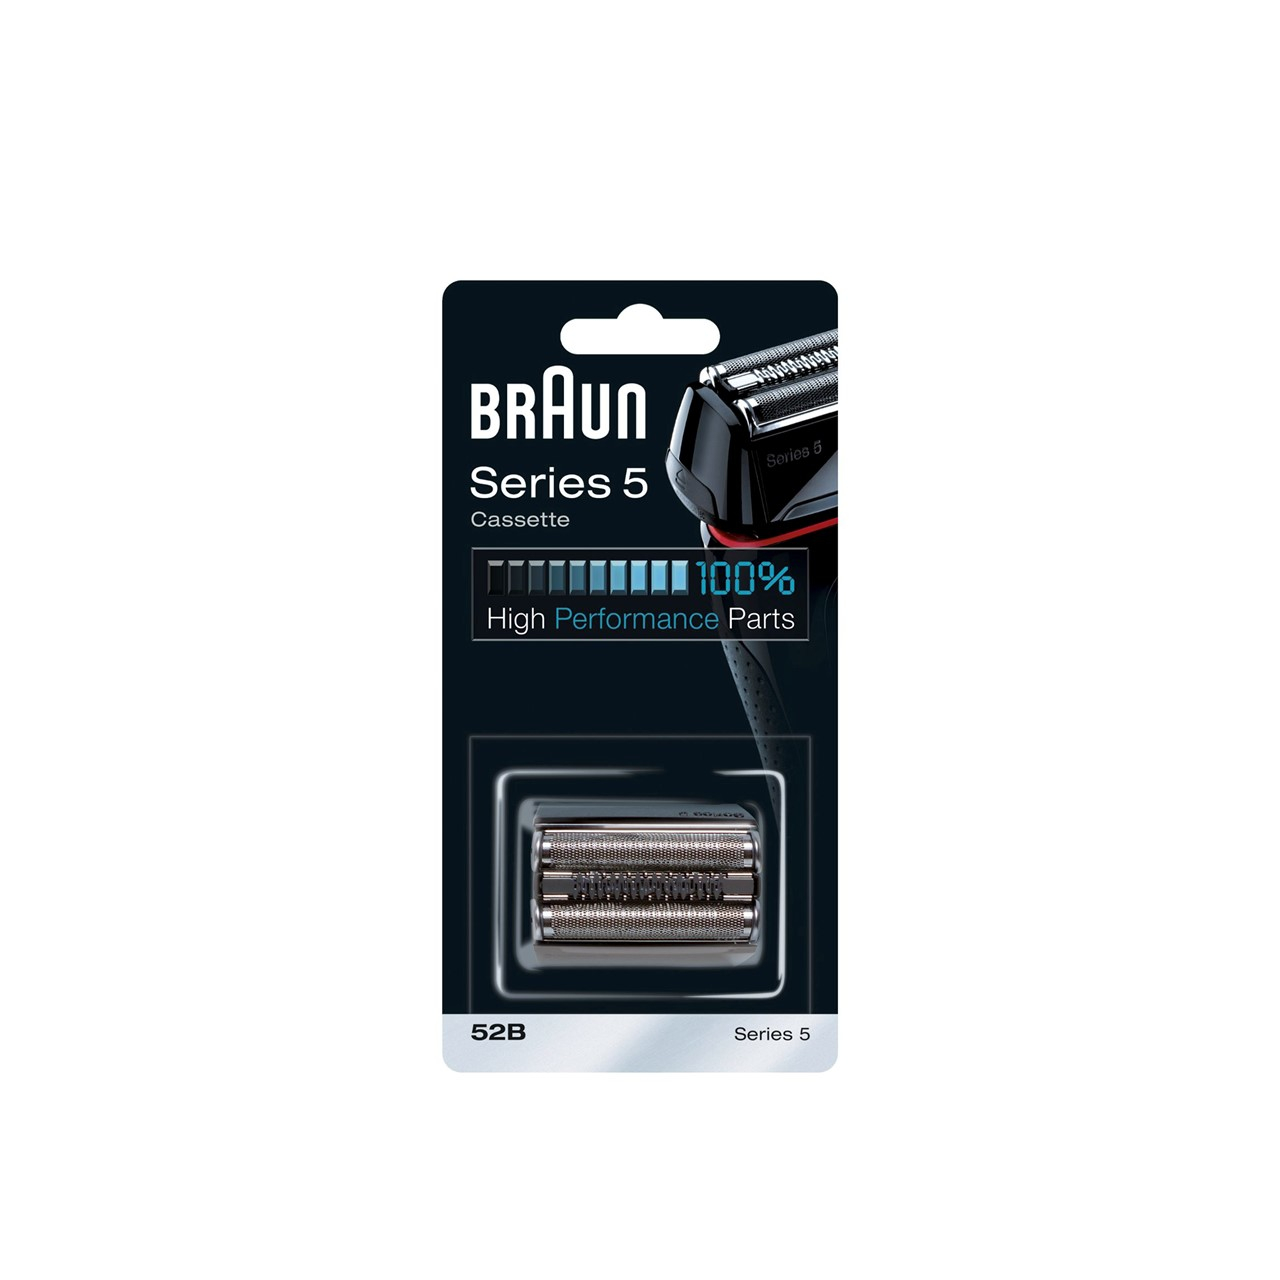 Buy Braun Series 5 Electric Shaver Cassette Replacement 52B · Macau